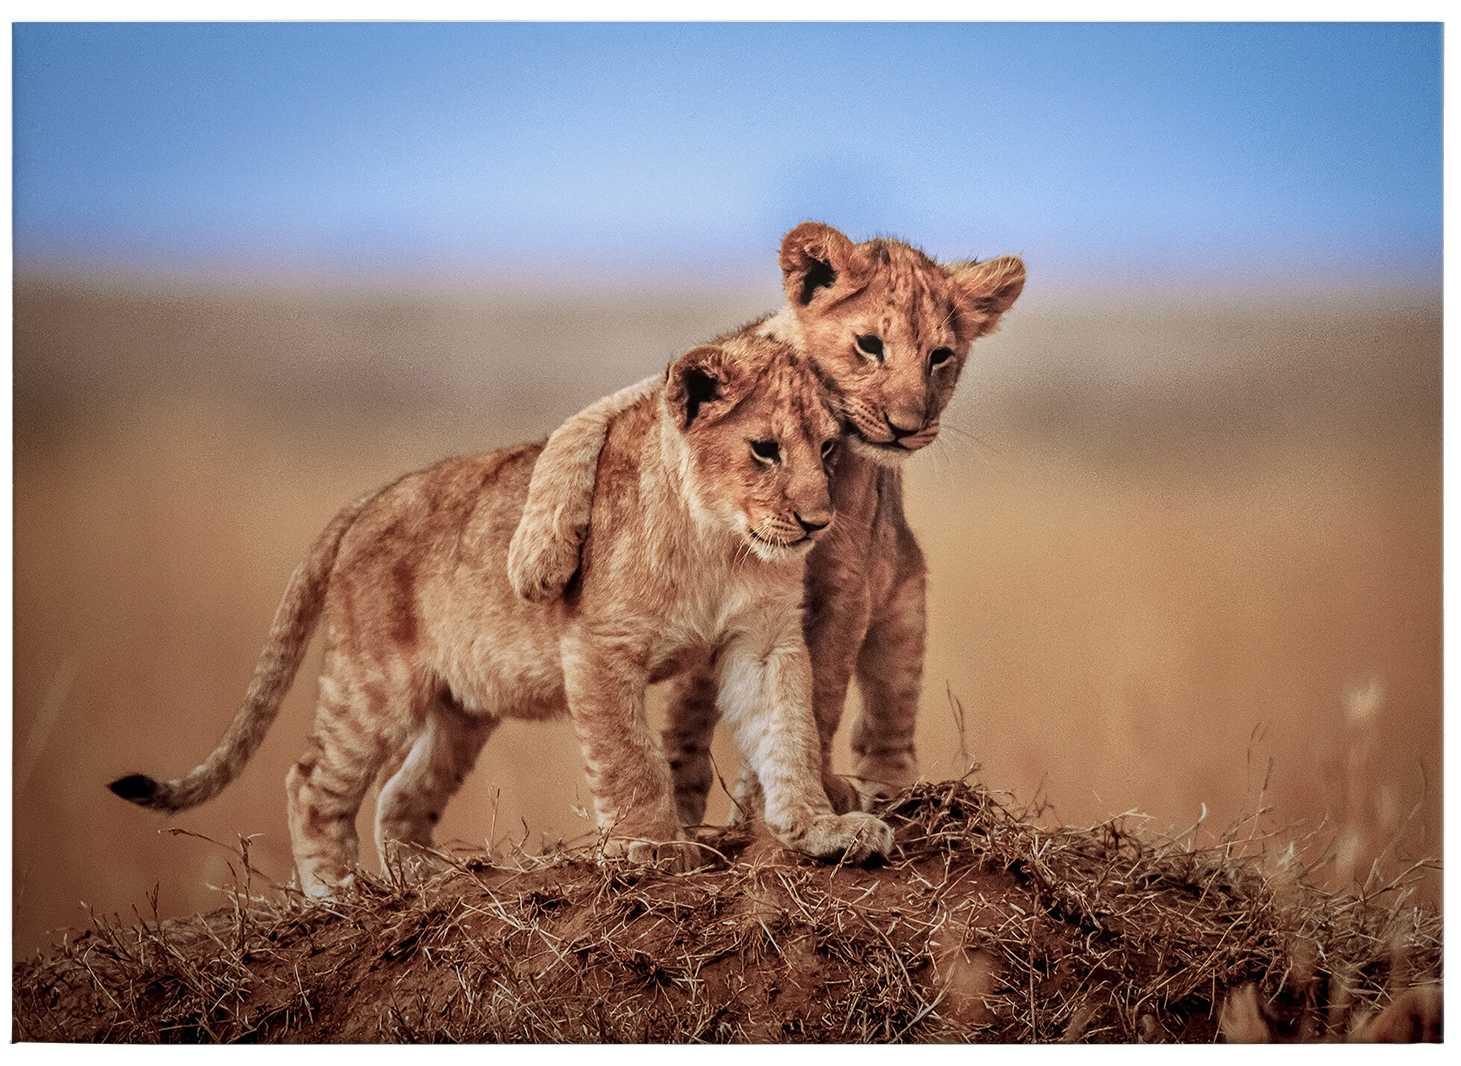             Cuadro Niños leones en la naturaleza - 0,70 m x 0,50 m
        